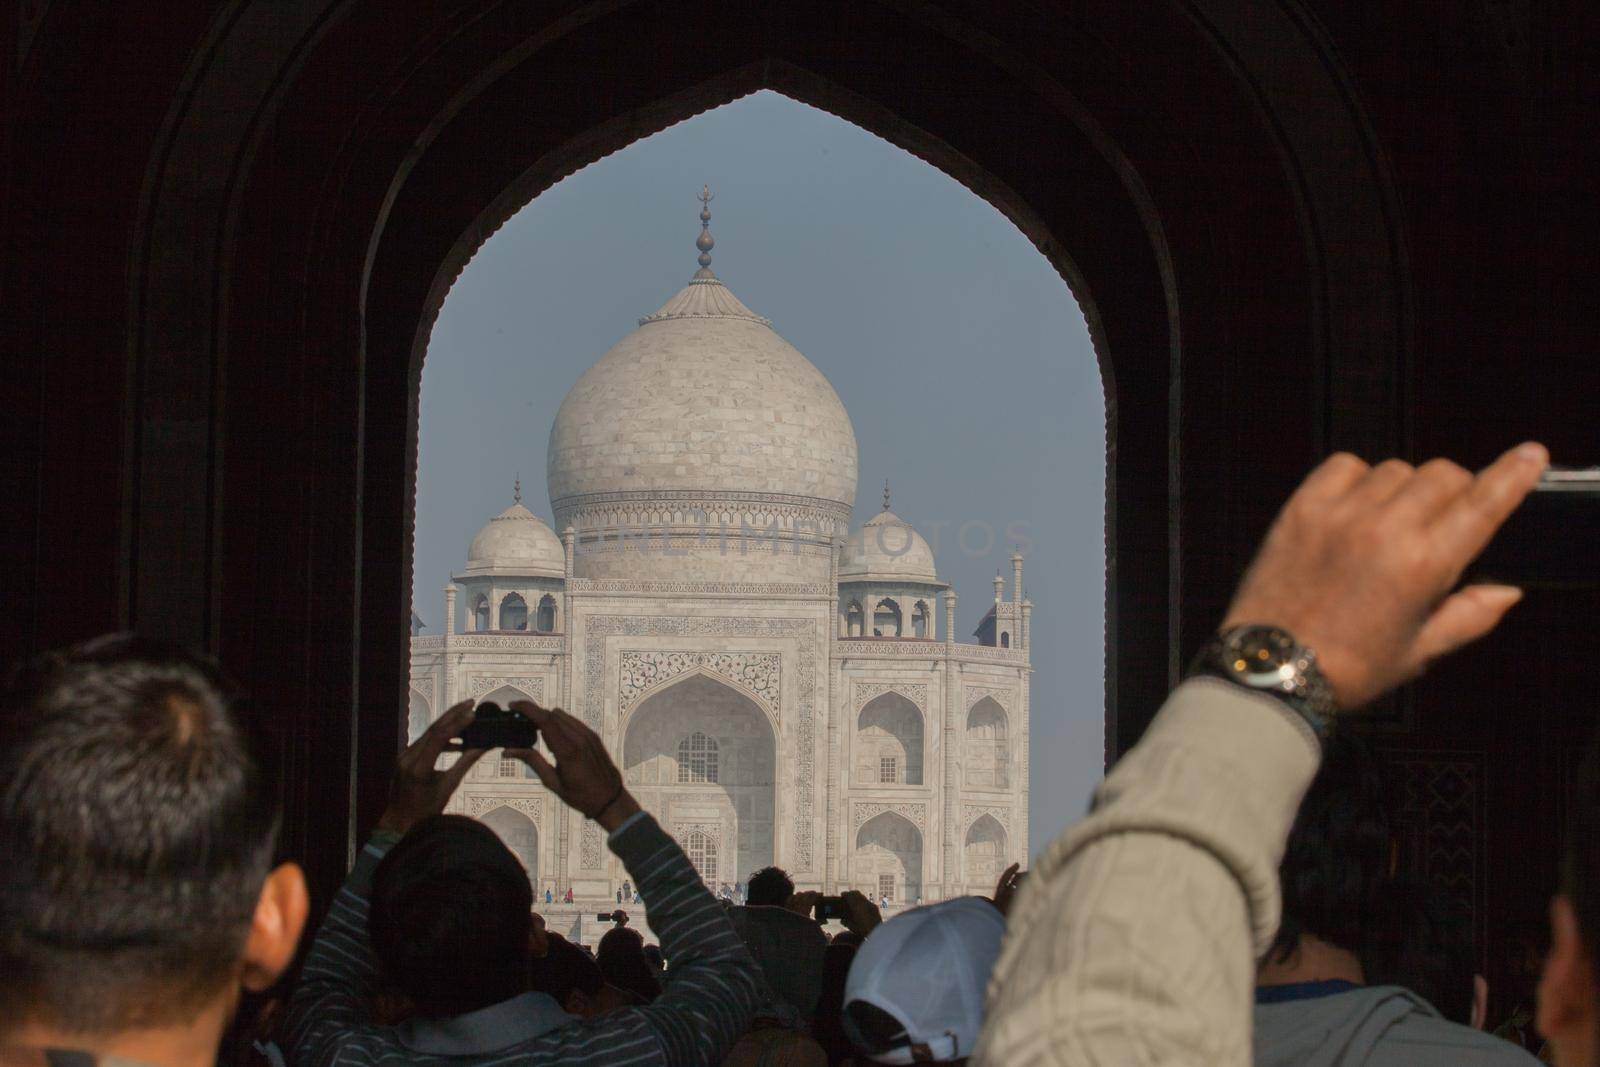 India, Uttar Pradesh, Agra, Taj Mahal, silhouette of tourists with mobile phones